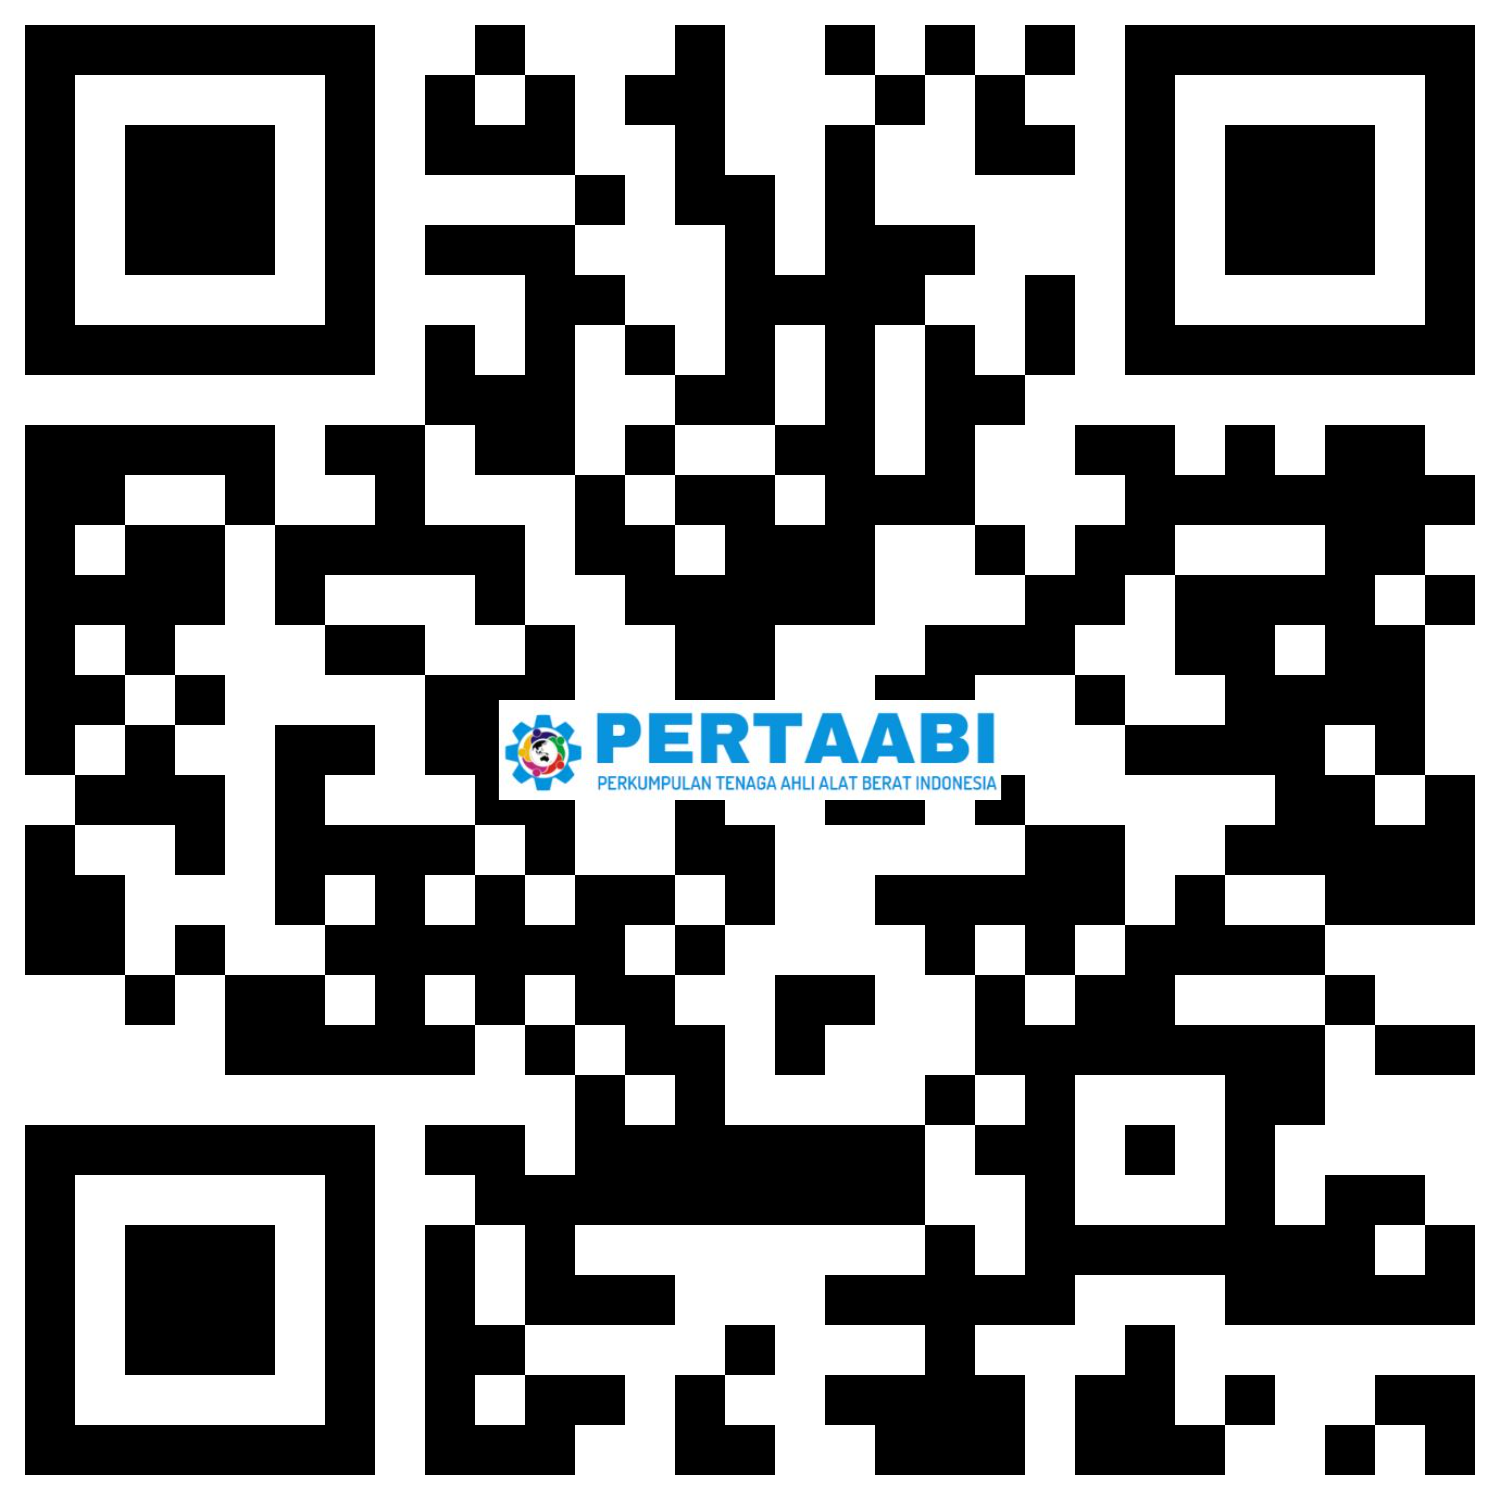 Barcode Pertaabi